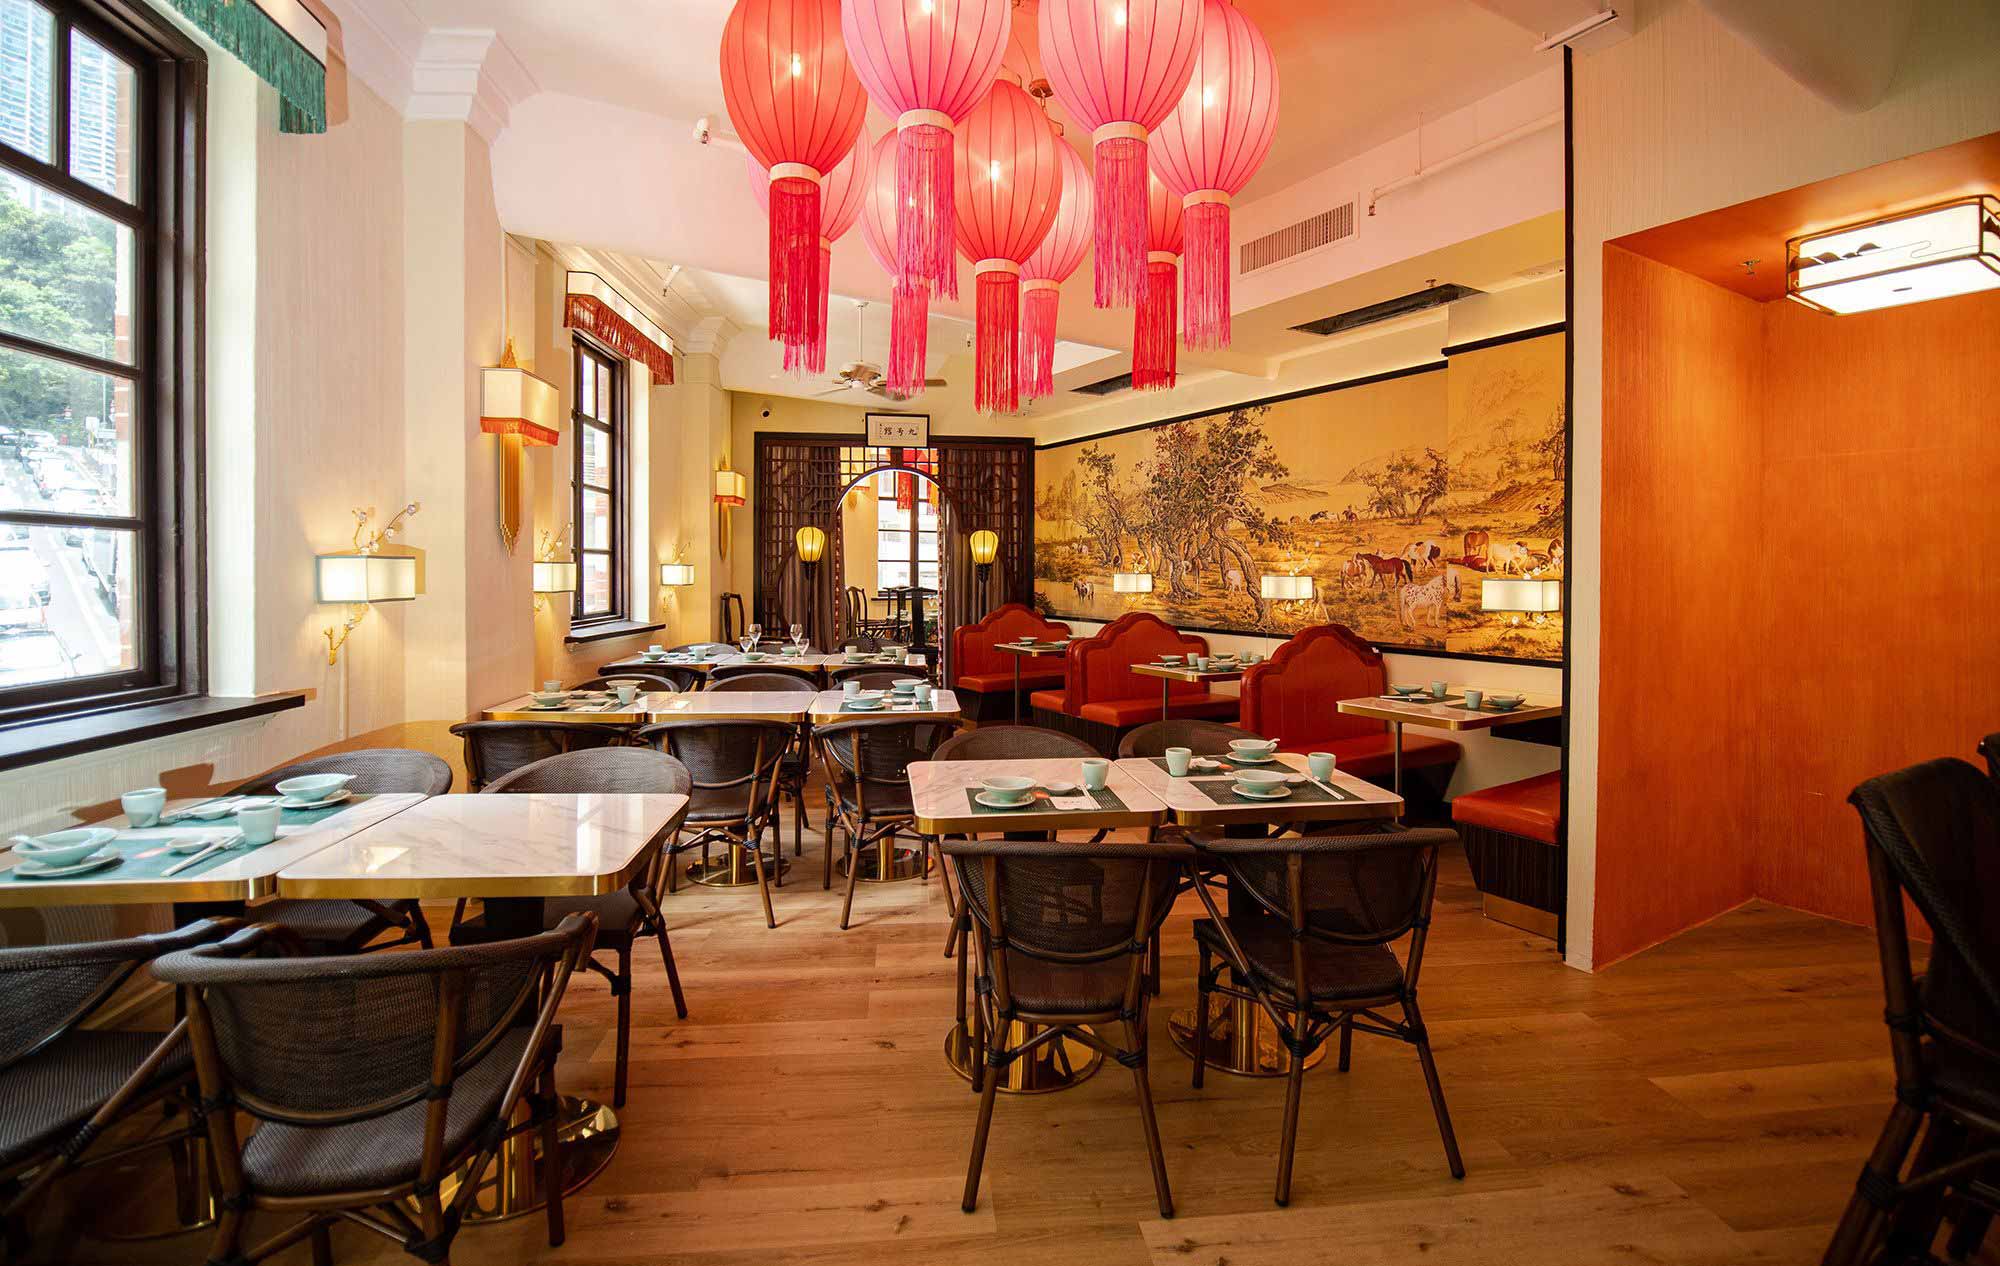 Nove Dim Sum Restaurant interiors with red lanterns